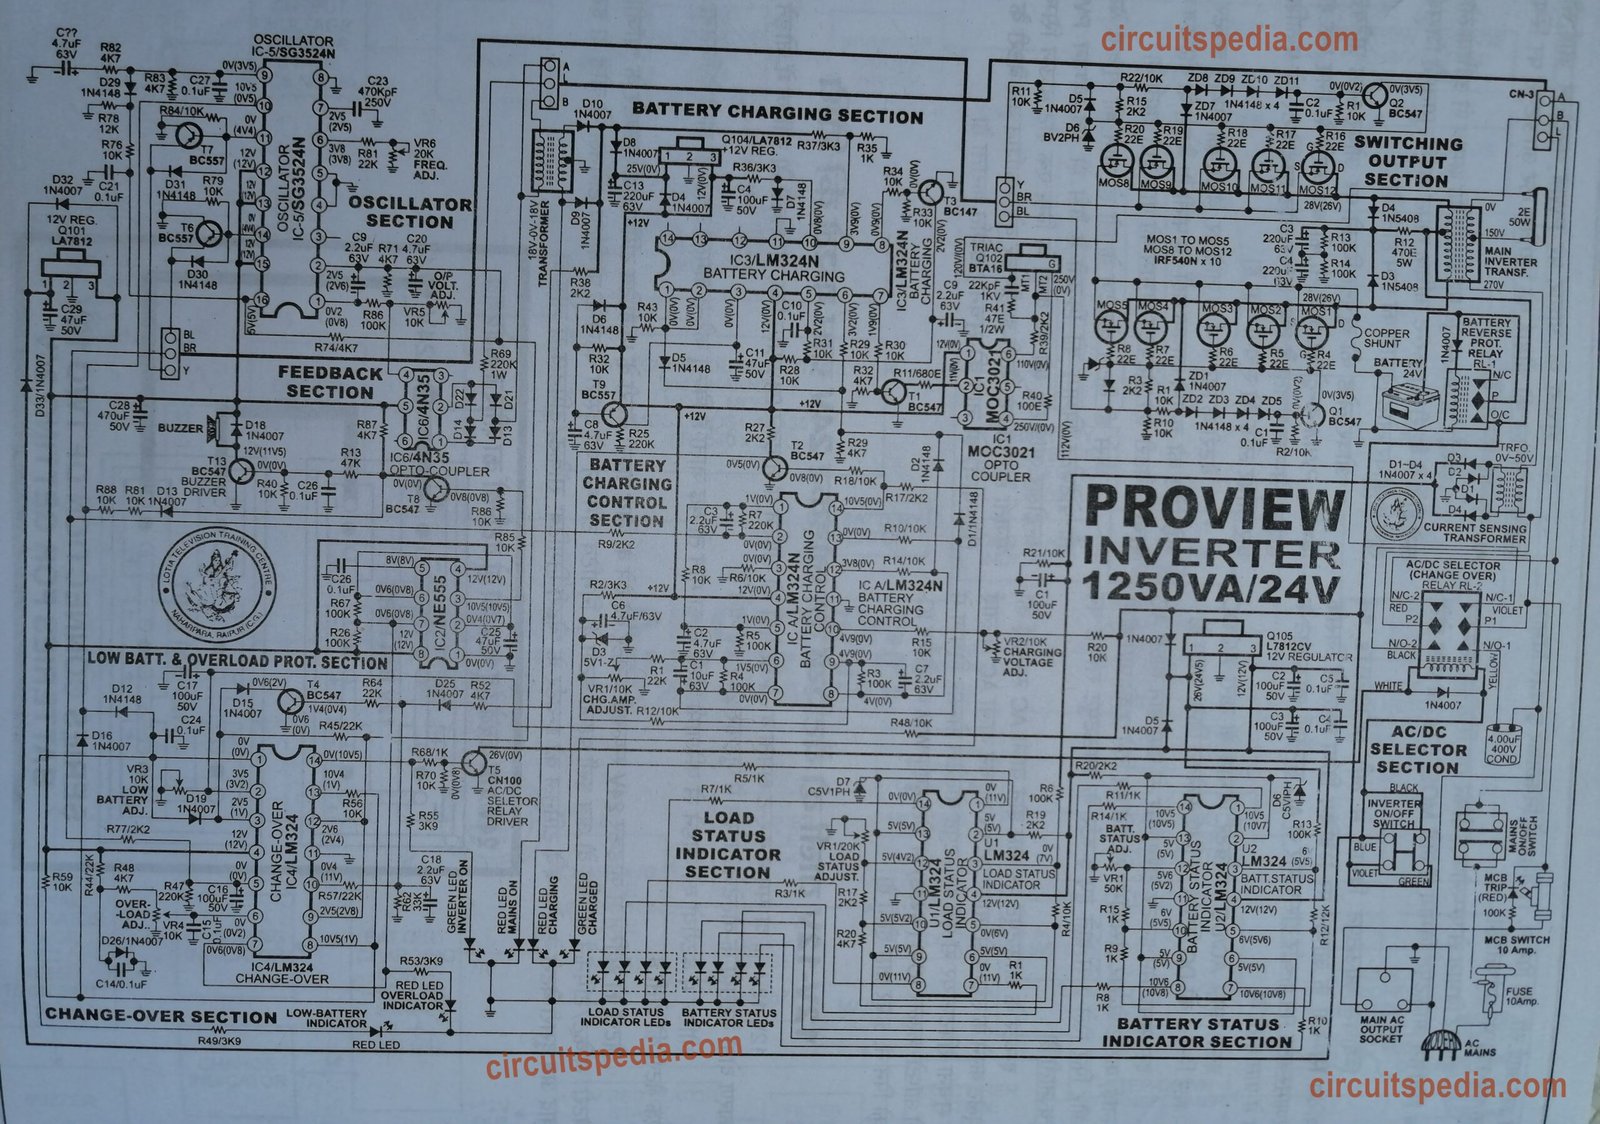 high power proview inverter circuit diagram